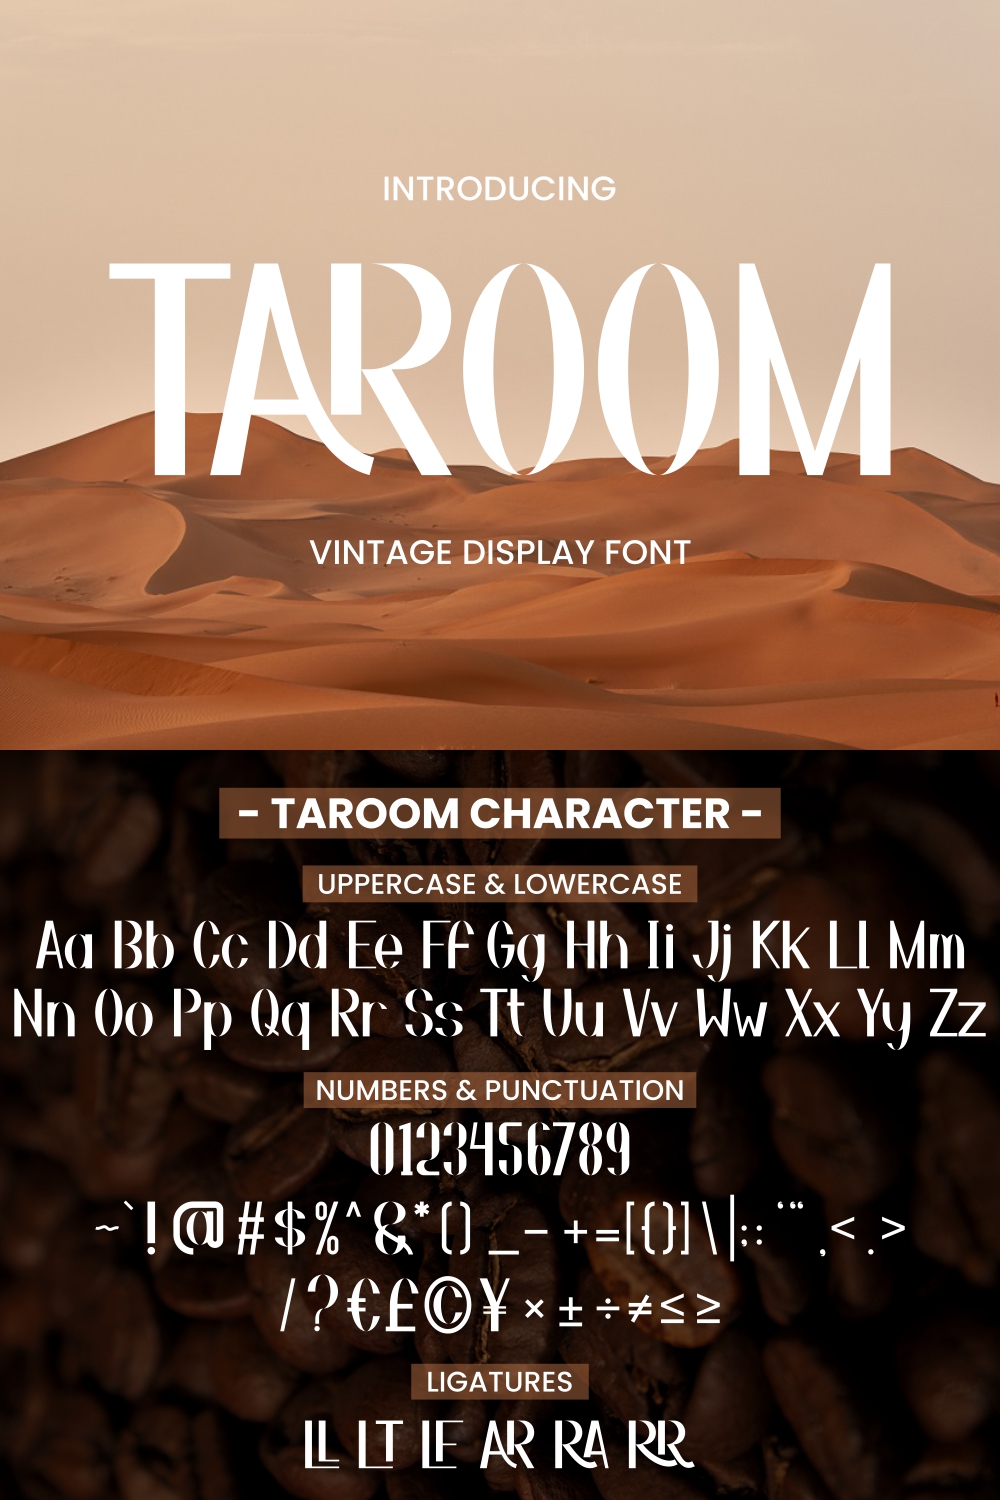 Taroom - Vintage Display Font pinterest preview image.